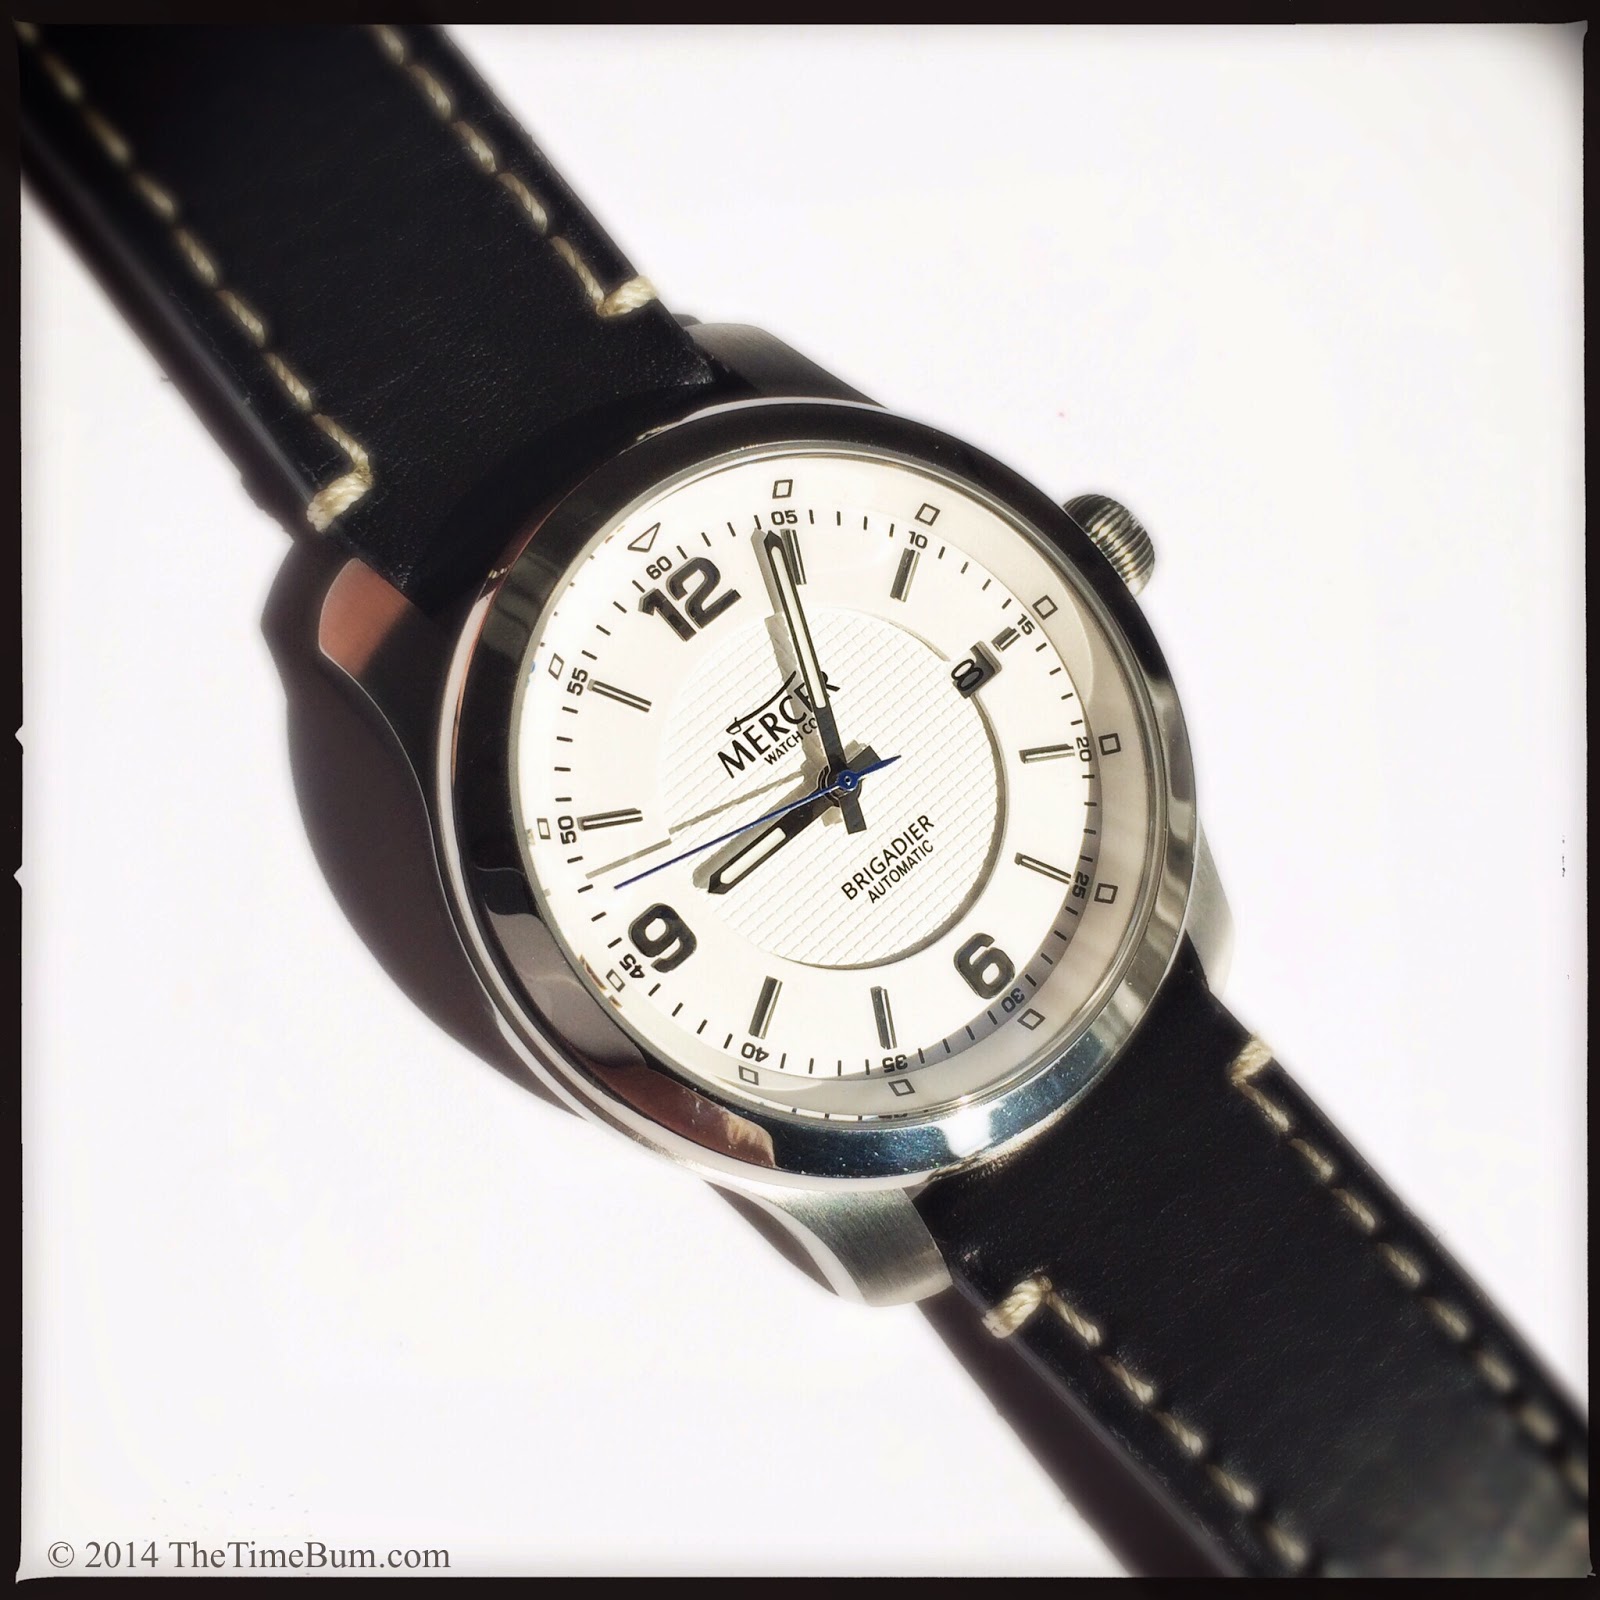 Mercer Watch Company Brigadier Prototype - The Time Bum